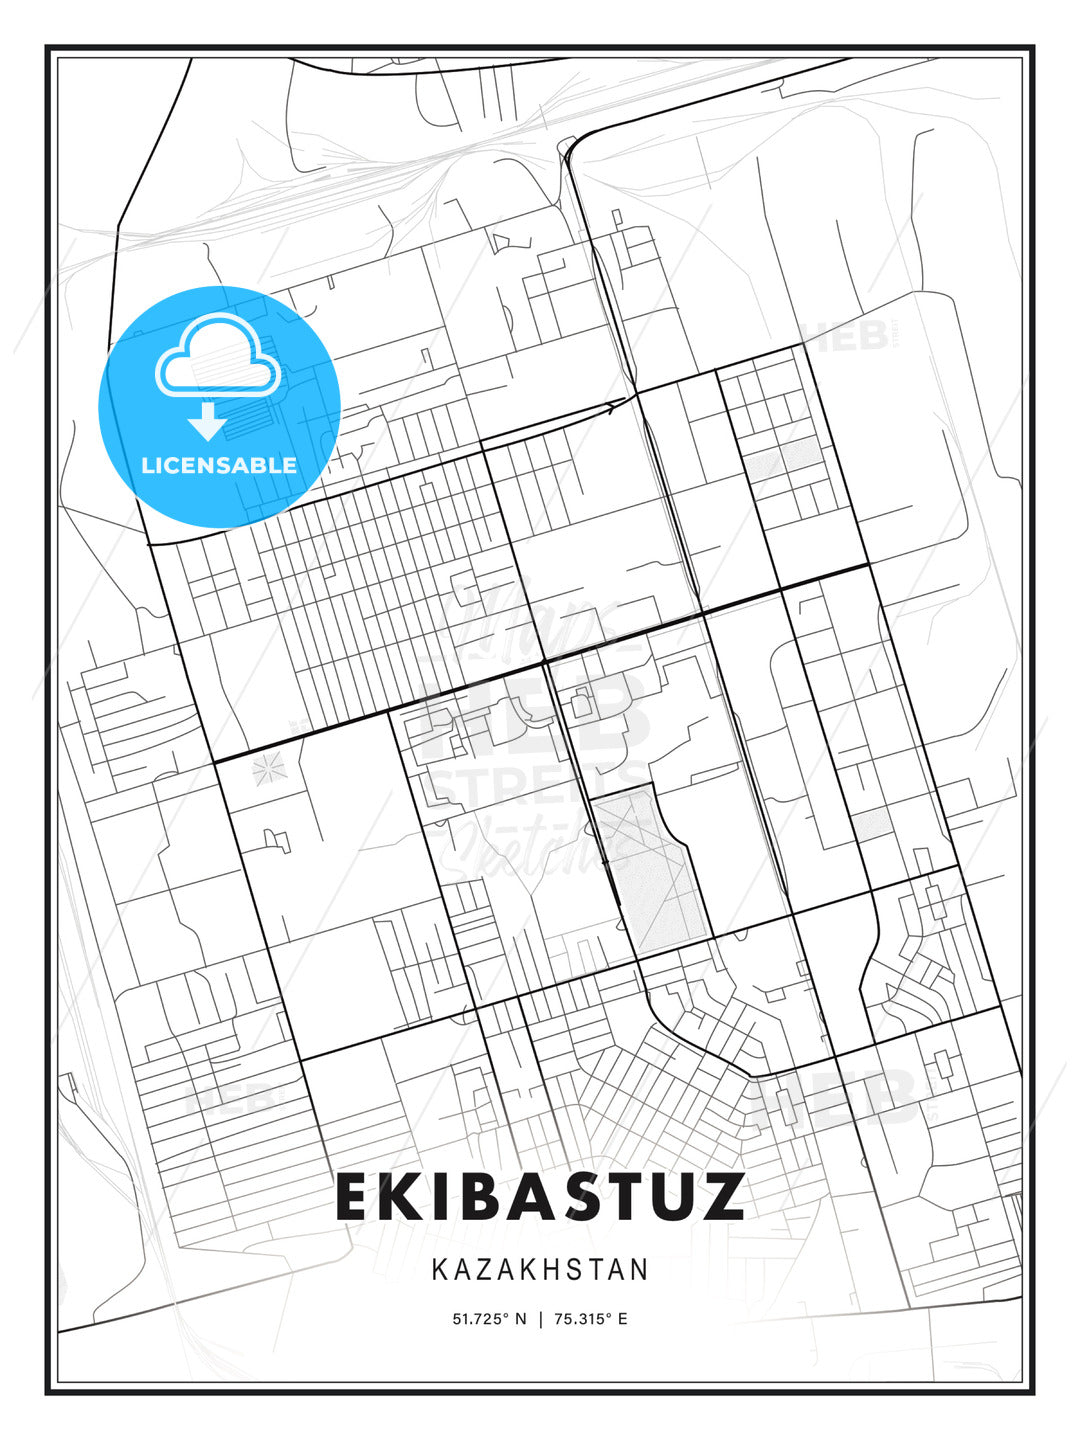 Ekibastuz, Kazakhstan, Modern Print Template in Various Formats - HEBSTREITS Sketches